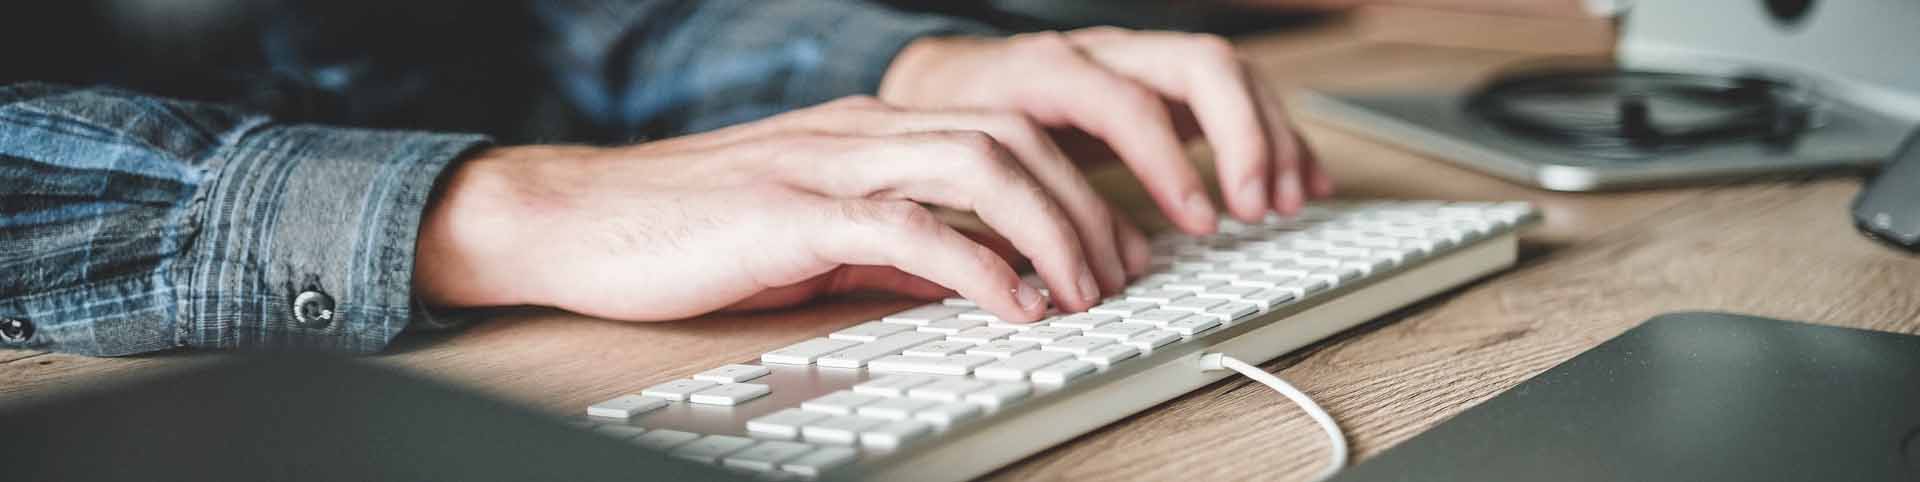 bg-person-hands-typing-on-desktop-keyboard